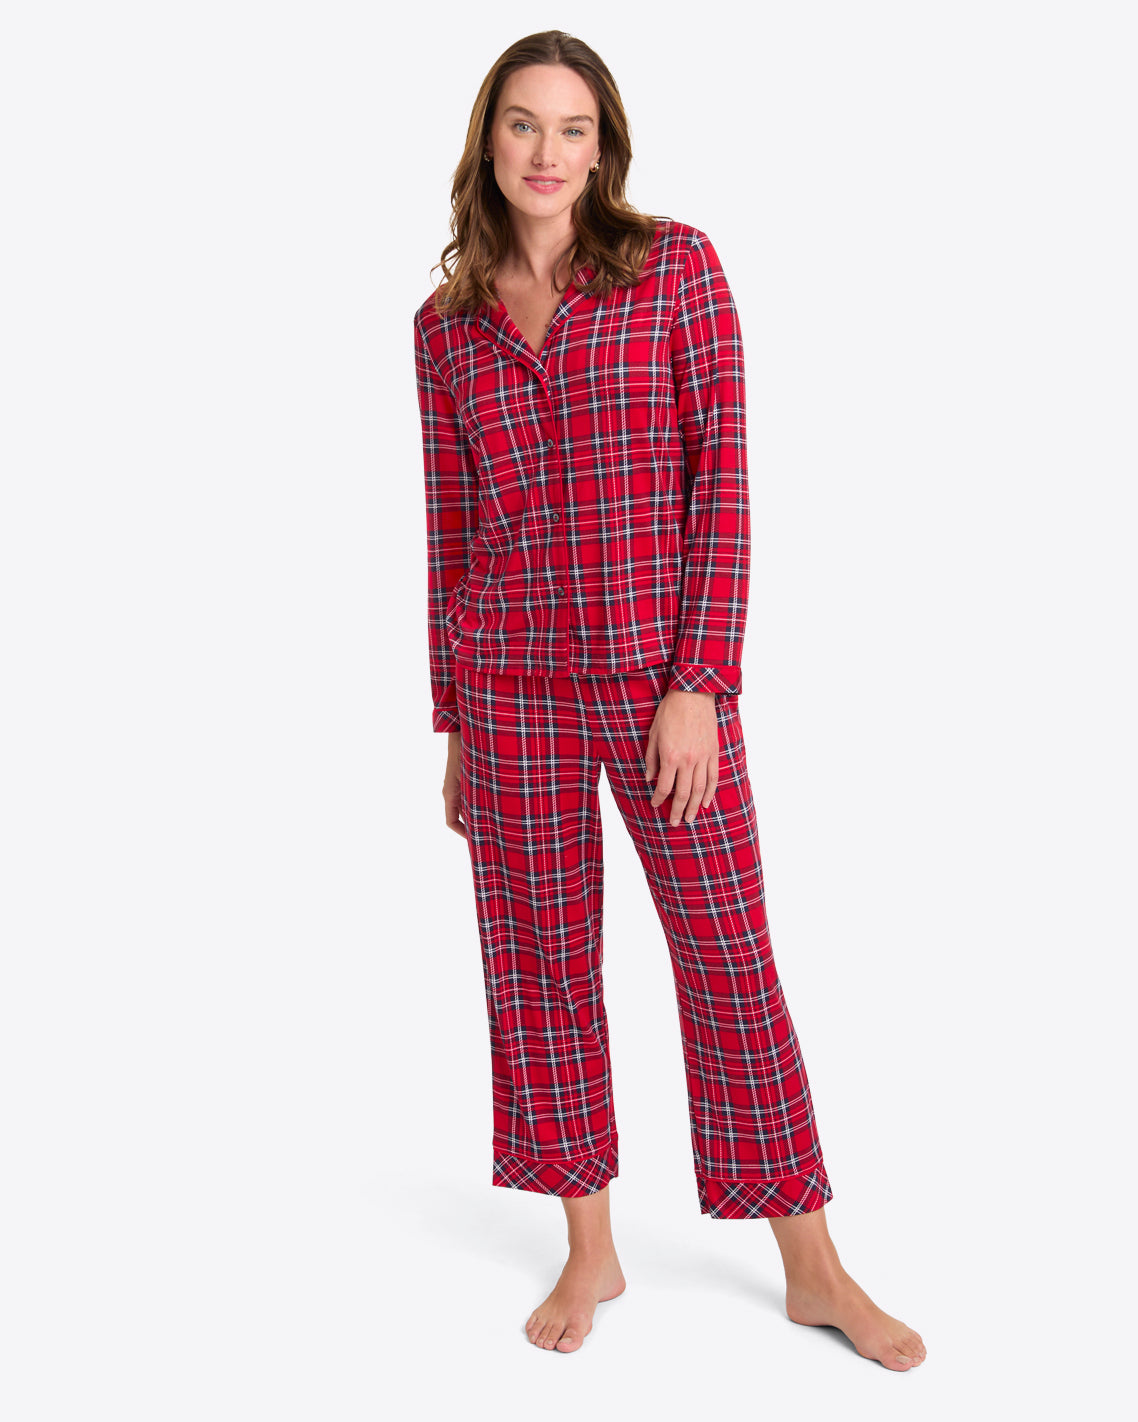 Linda Long Sleeve Pajama Set in Angie Plaid